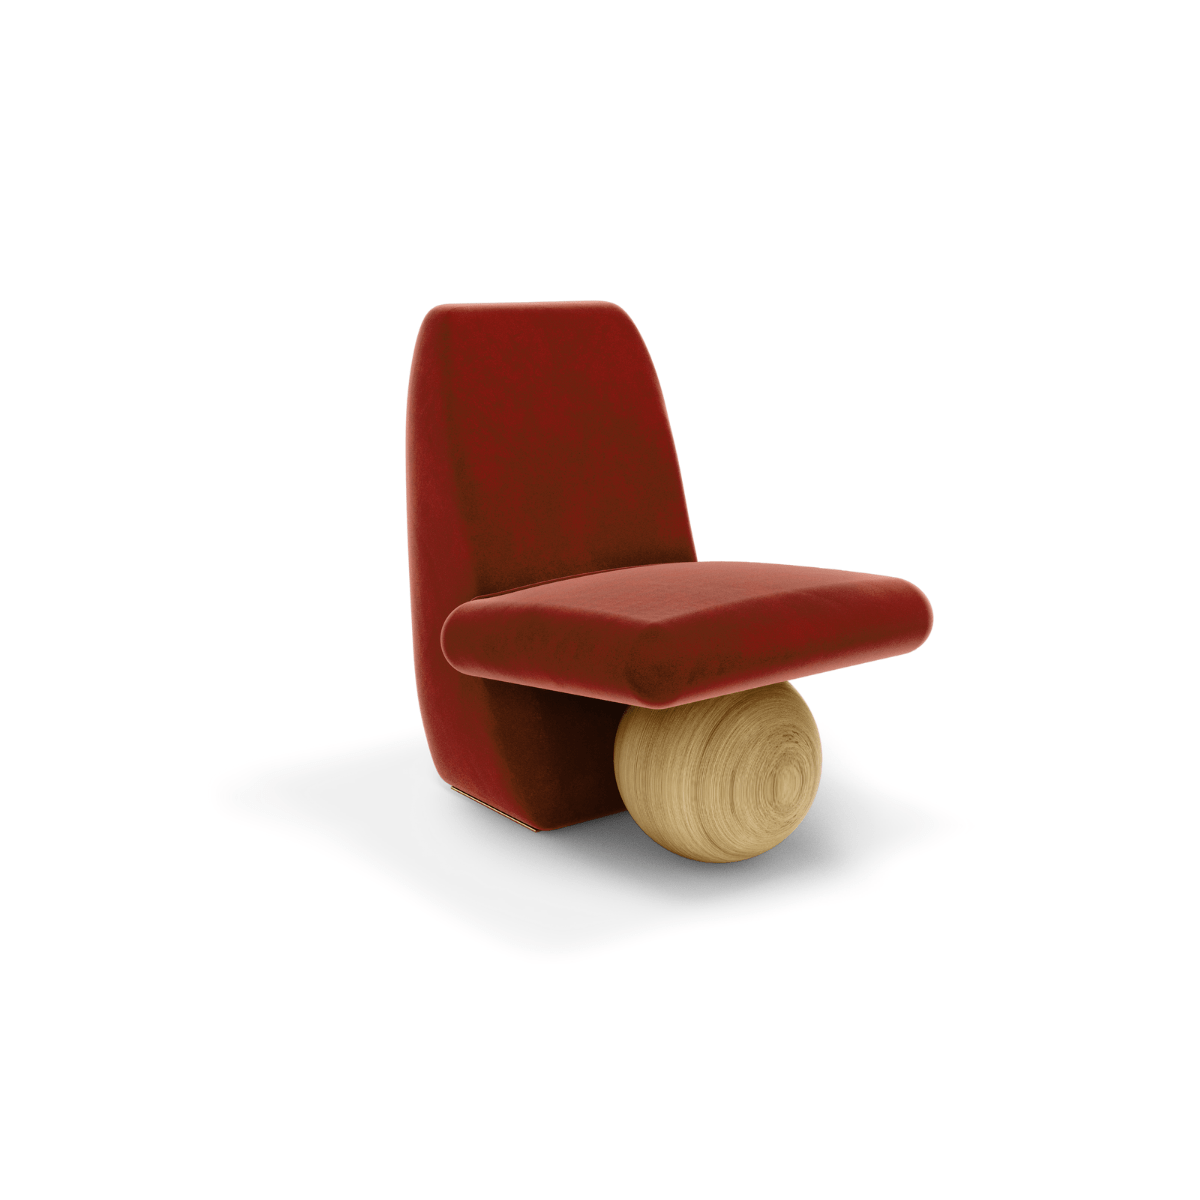 wooden-ball-chair-round-covet-collection-masquespacio